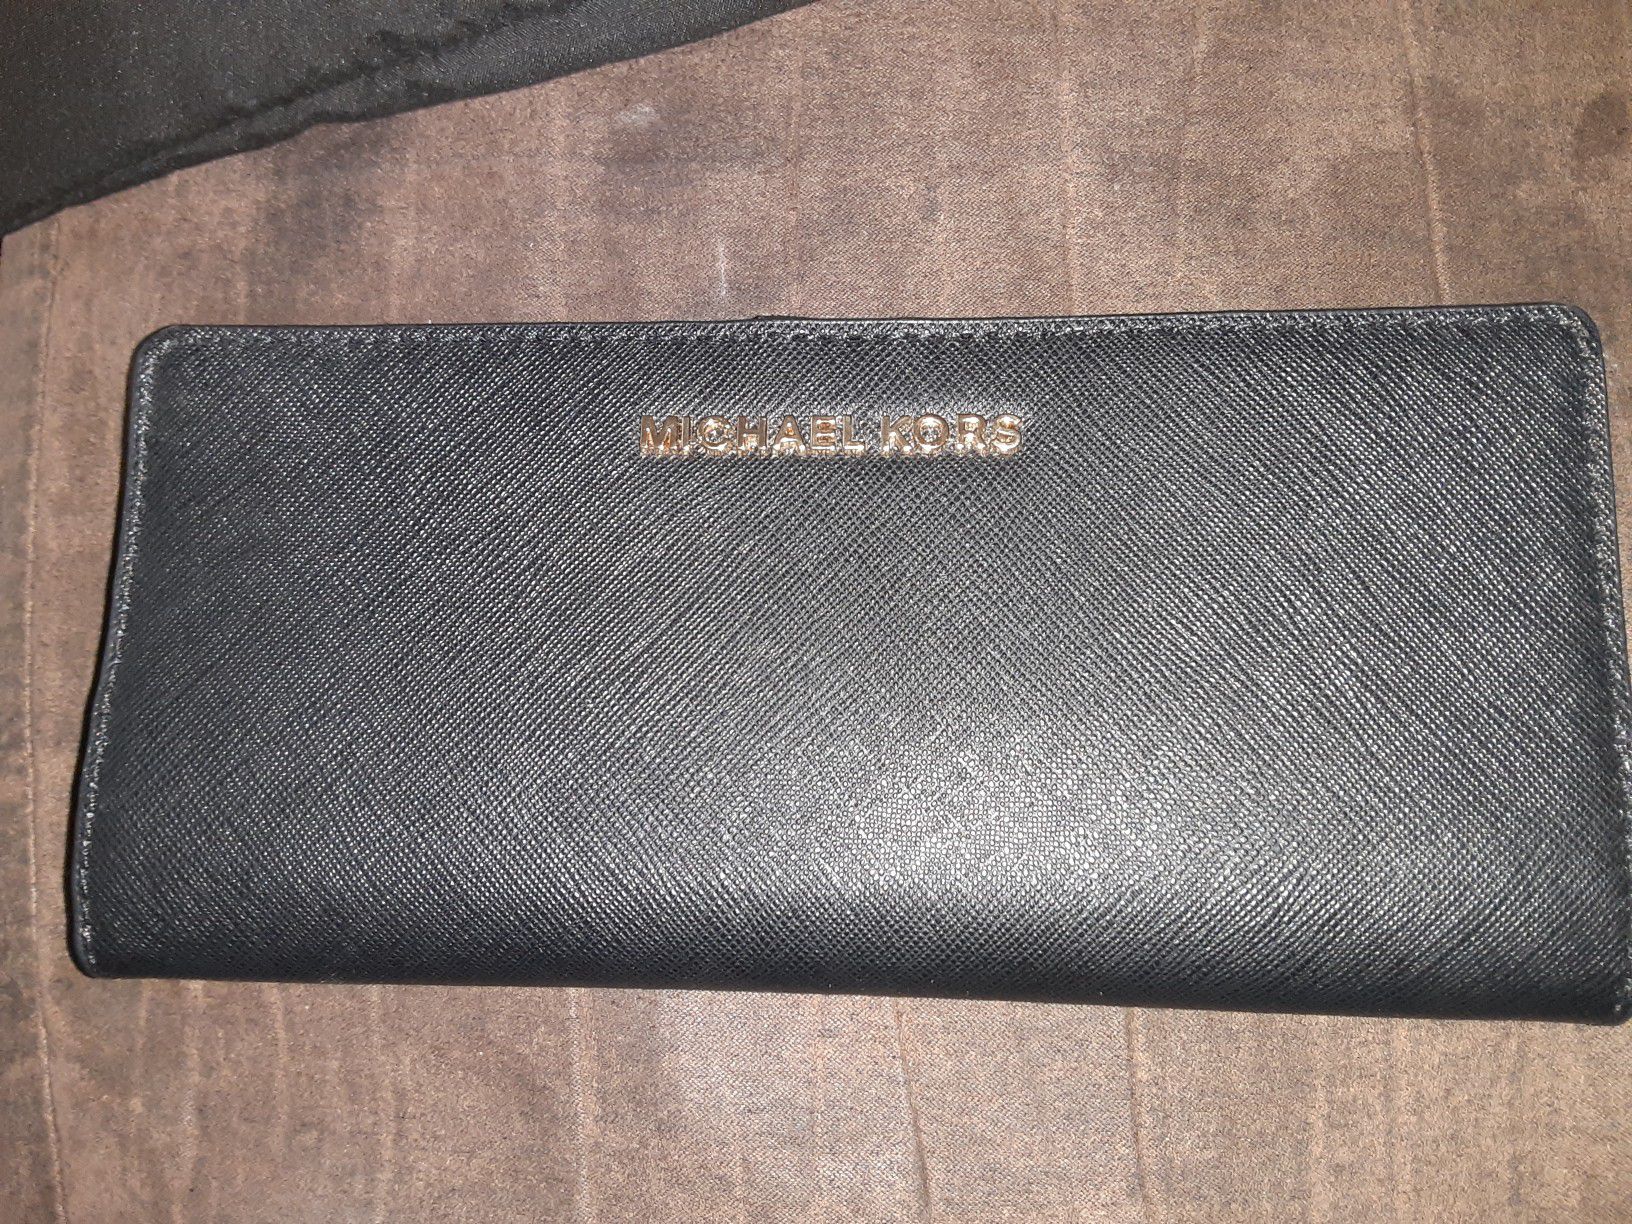 Brand new never used women's MK wallet